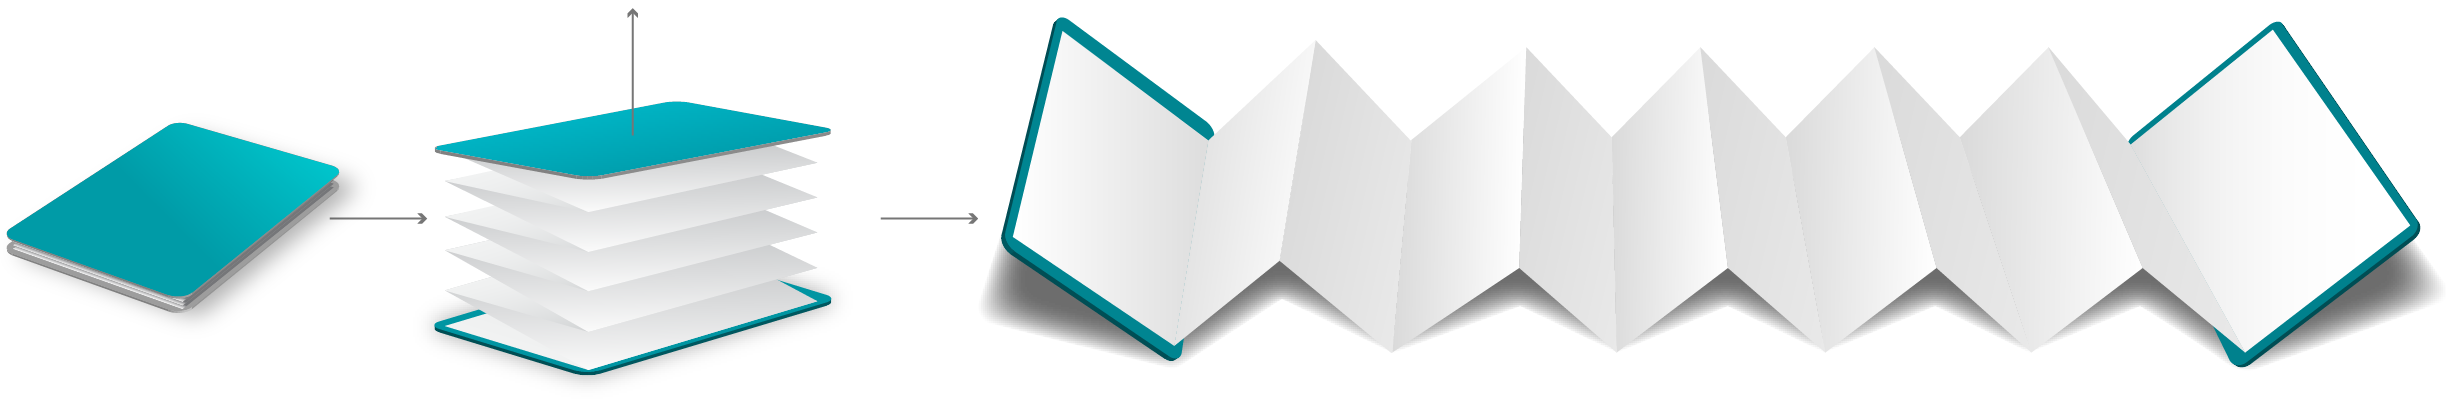 Pocket Maps single row accordion or concertina fold